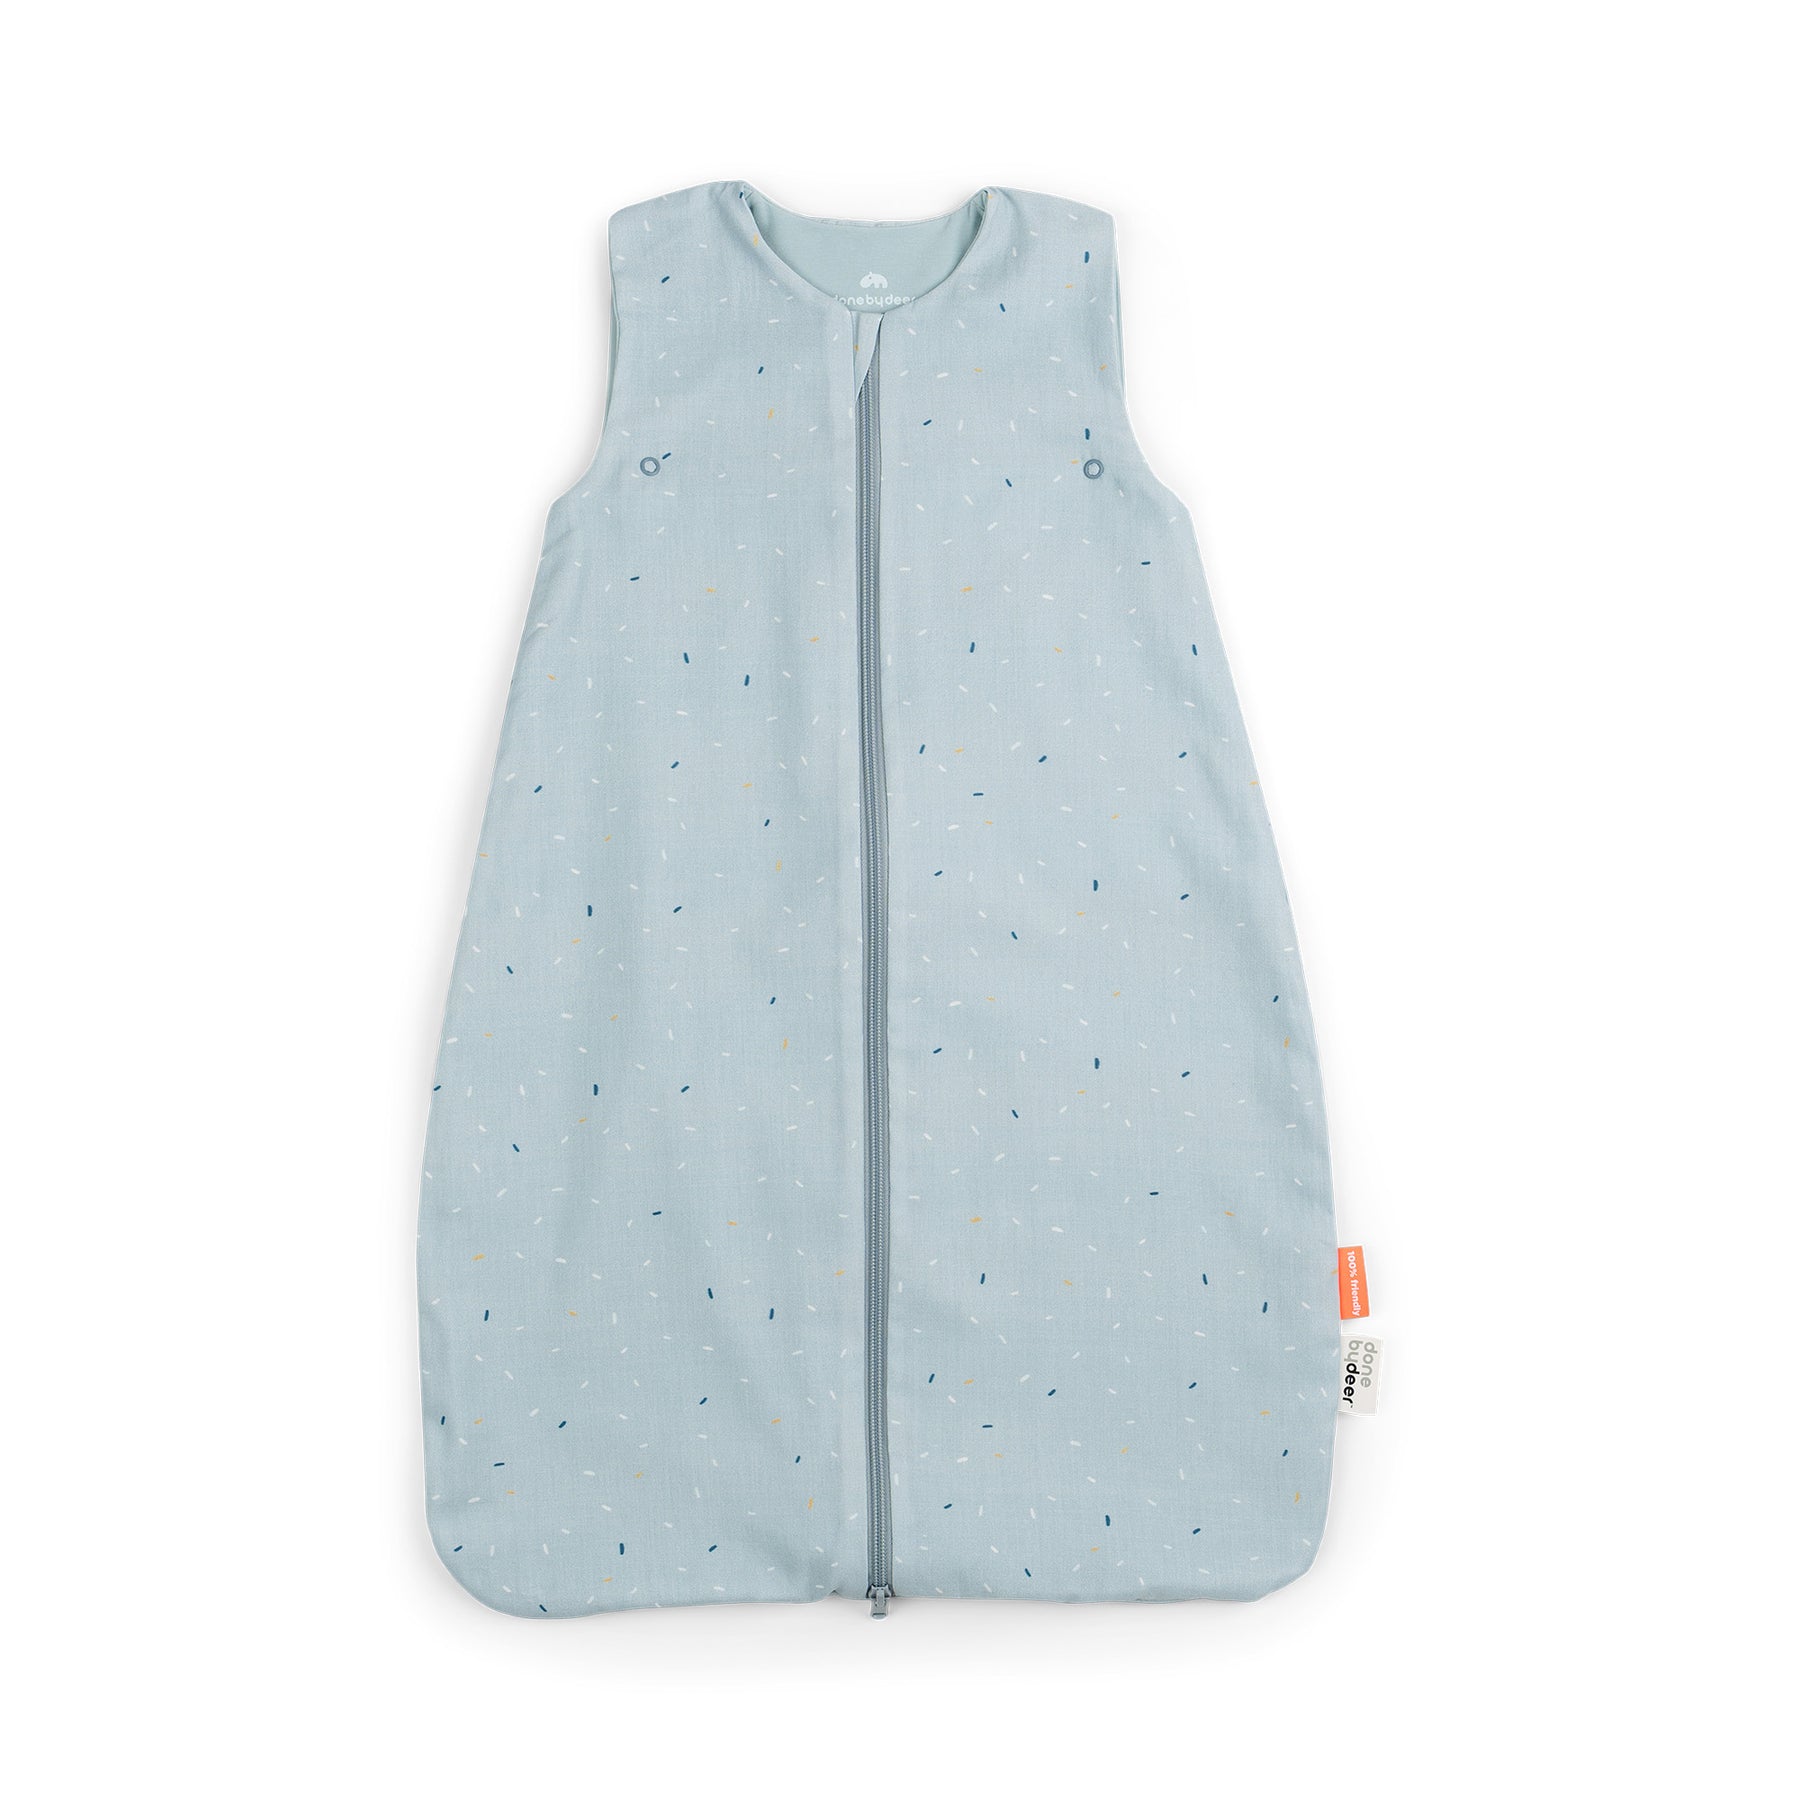 Sleepy bag 90 cm - Confetti - Blue - Front